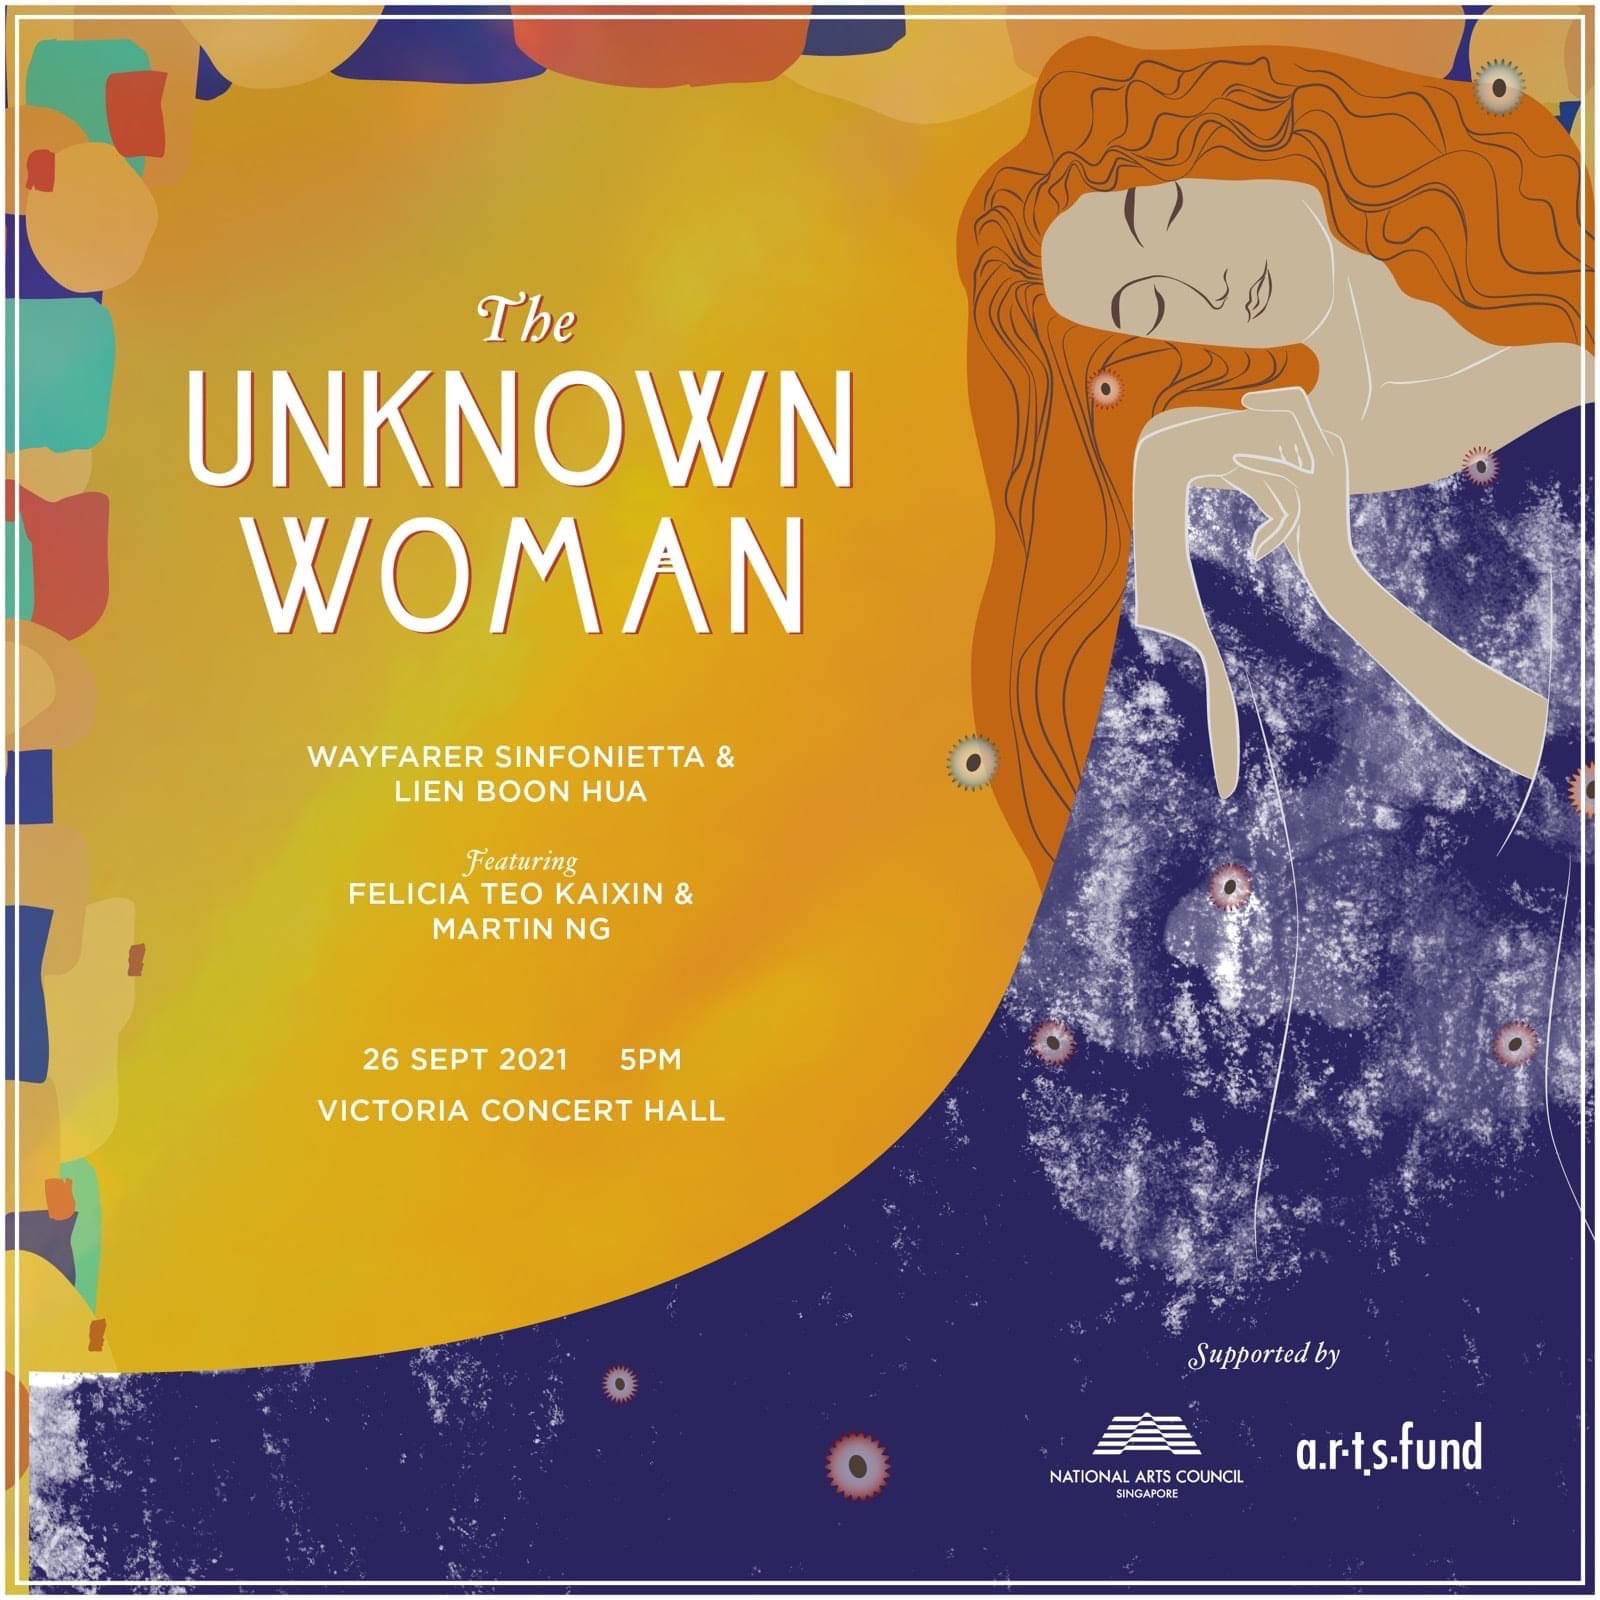 THE UNKNOWN WOMEN, by Wayfarer Sinfonietta, featuring Felicia Teo Kaixin & Martin Ng